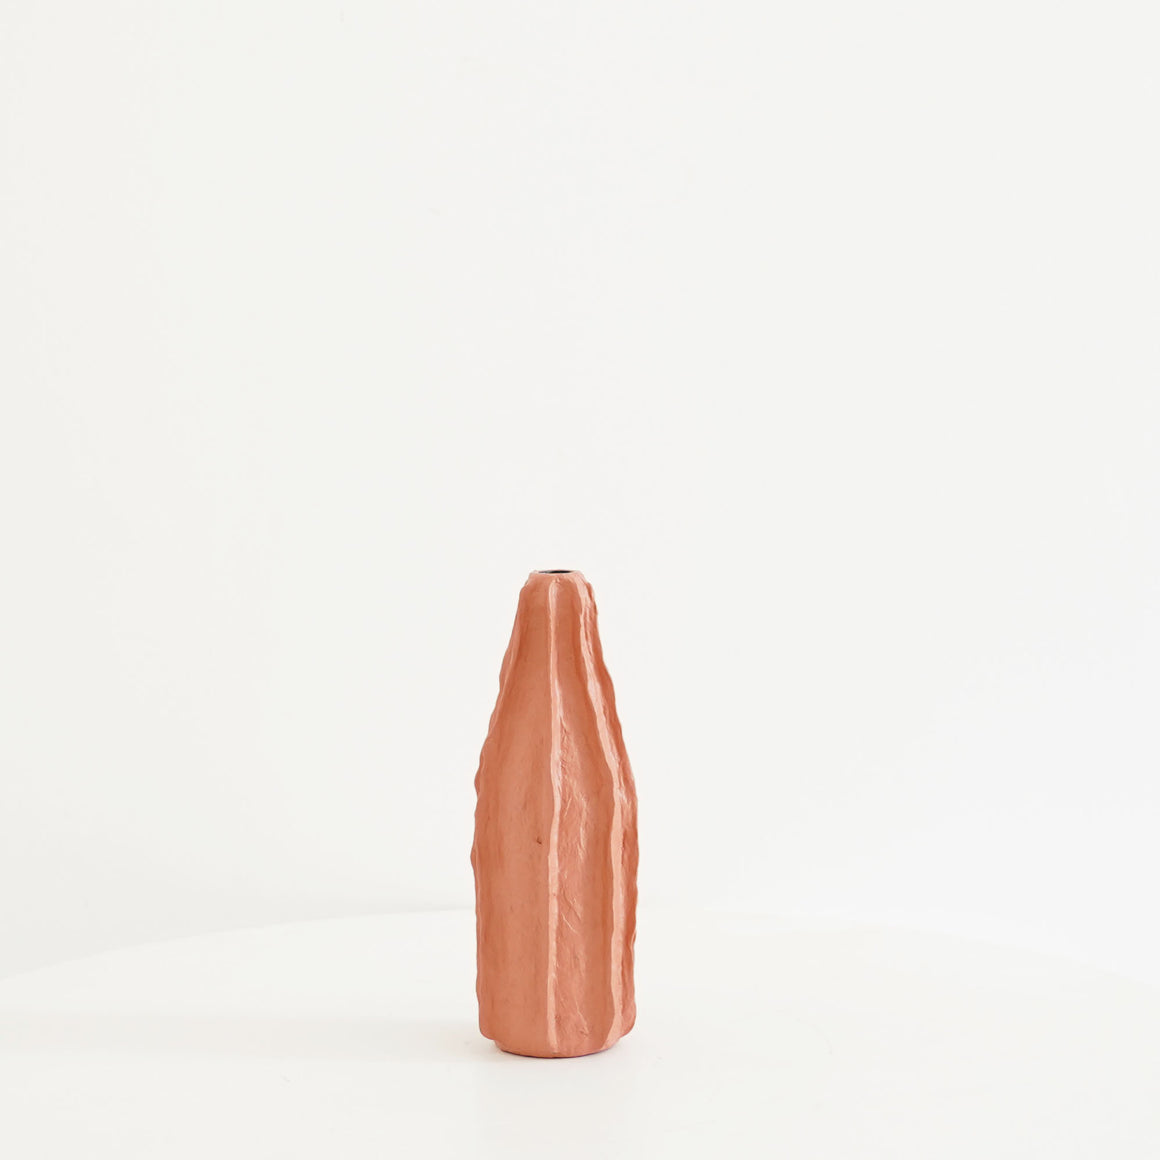 Axel Cactus Bottle Vase - Home Decor